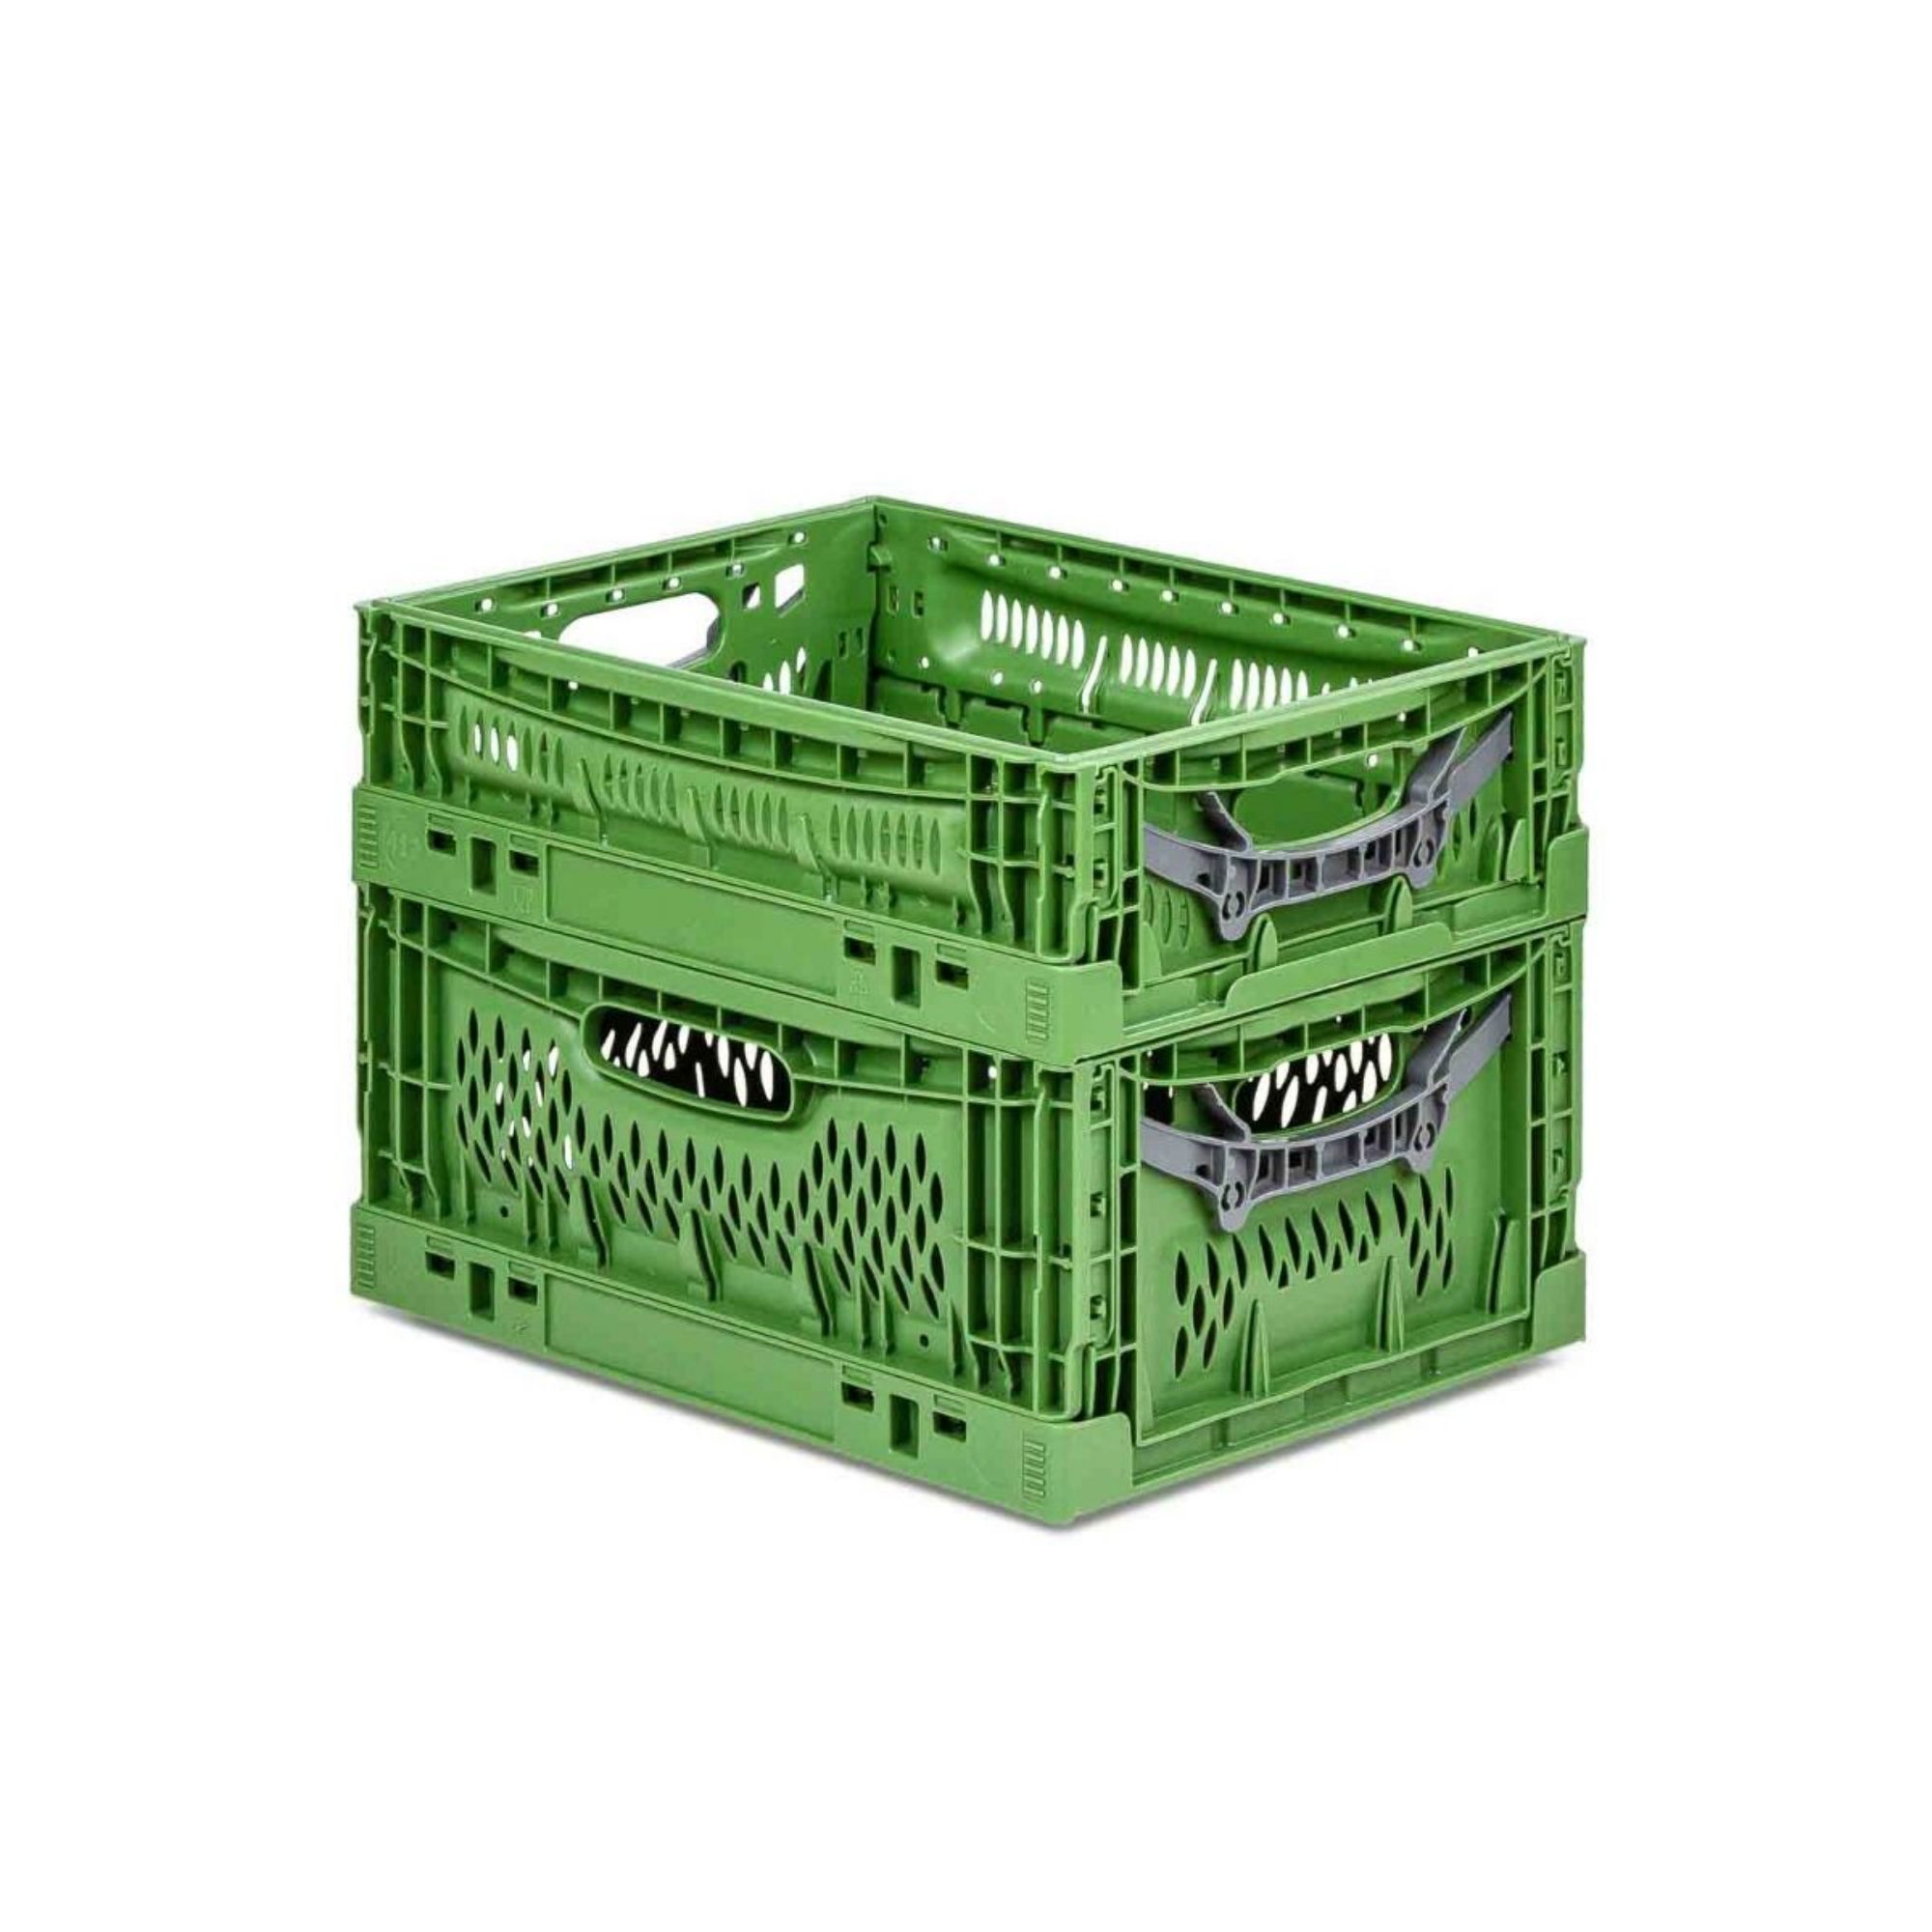 SuperSparSet 10x Stabile Profi-Klappbox Chameleon in Industriequalität | HxBxT 23x40x60cm | 45 Liter | klappbar stapelbar durchbrochen lebensmittelecht | Eurobox Eurobehälter Transportbehälter Stapelbehlter Faltbox